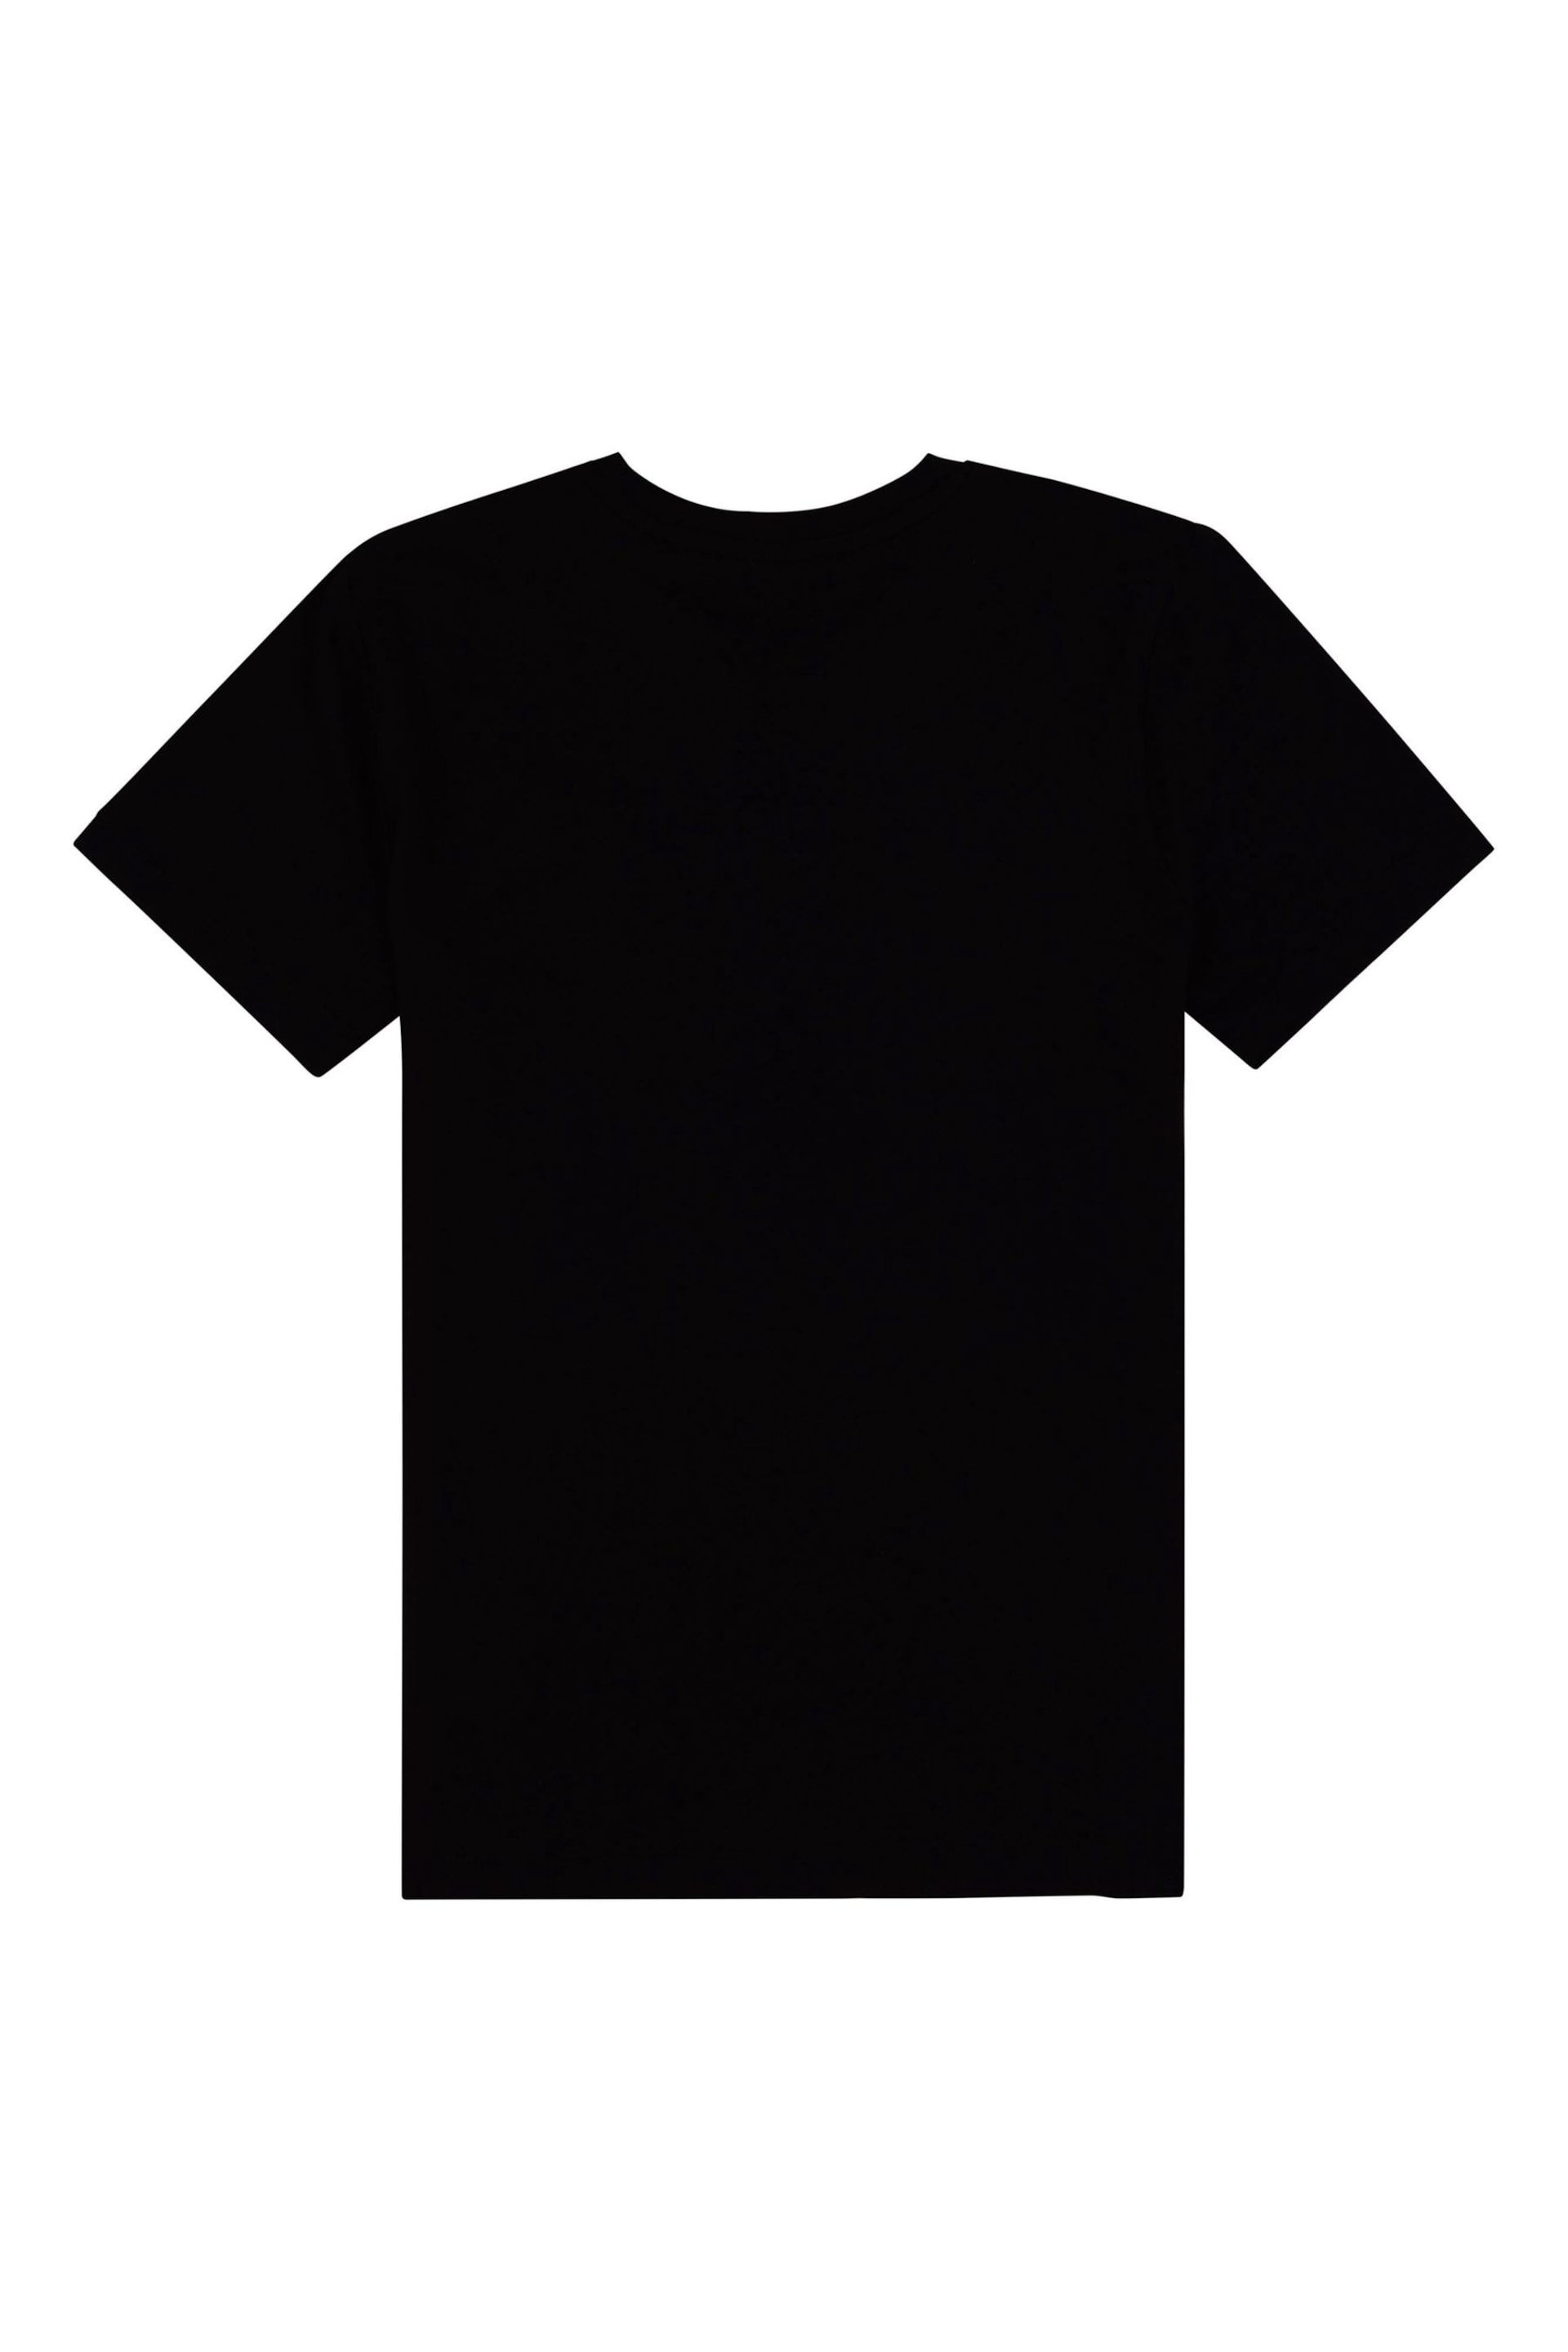 Jack Wills Script Black T-Shirt - Image 2 of 3